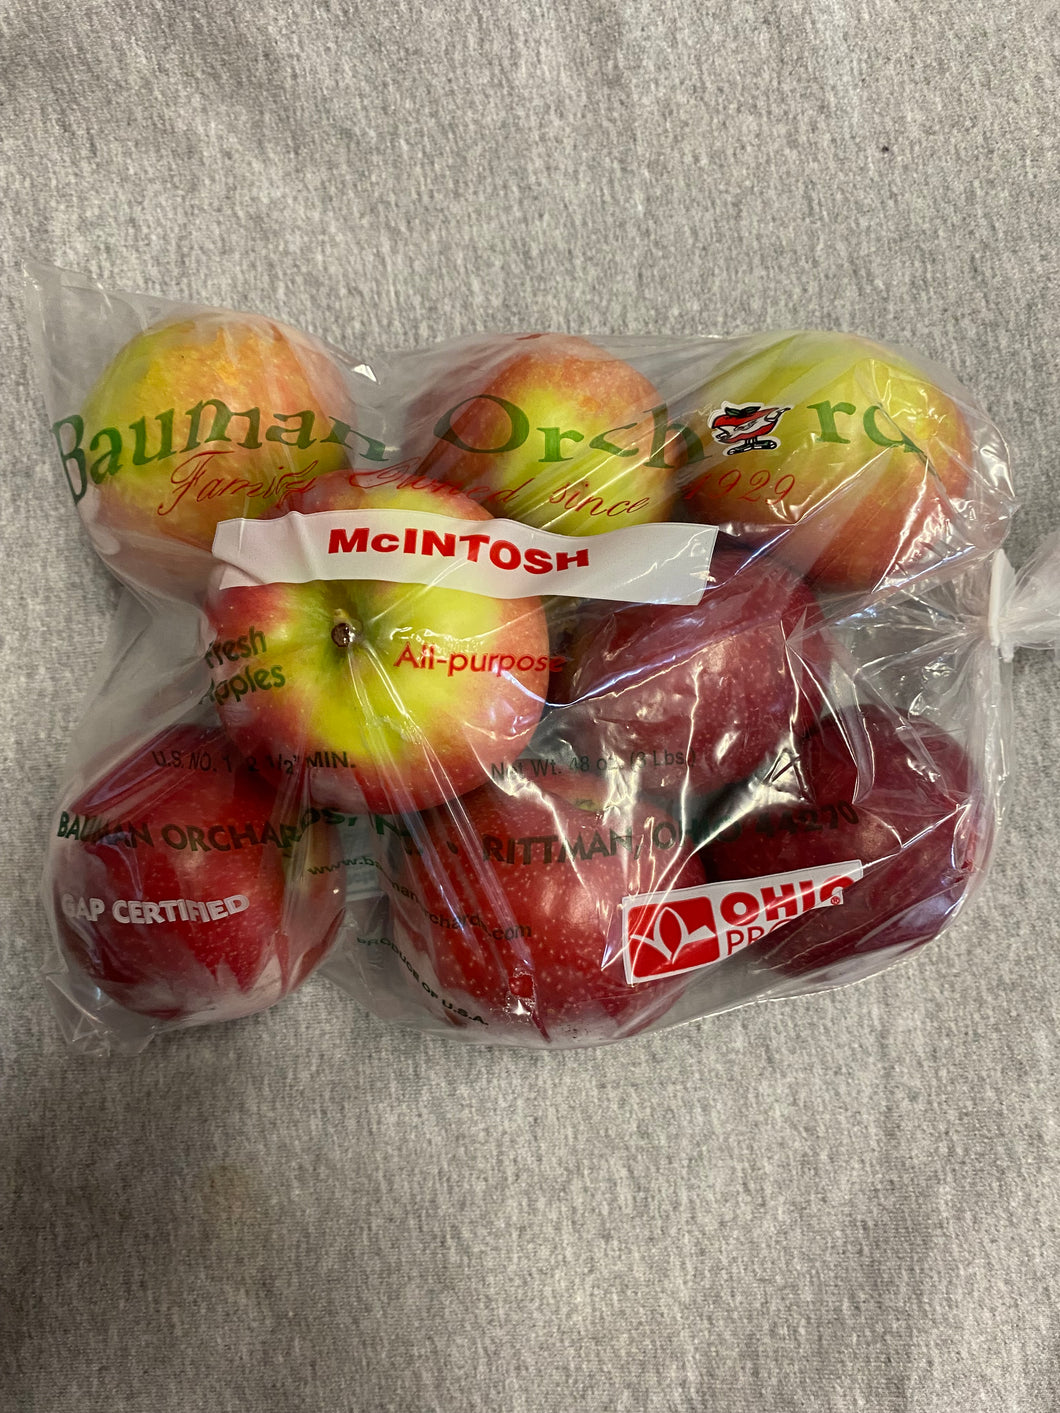 Apples, Macintosh -3lb bag *SALE*